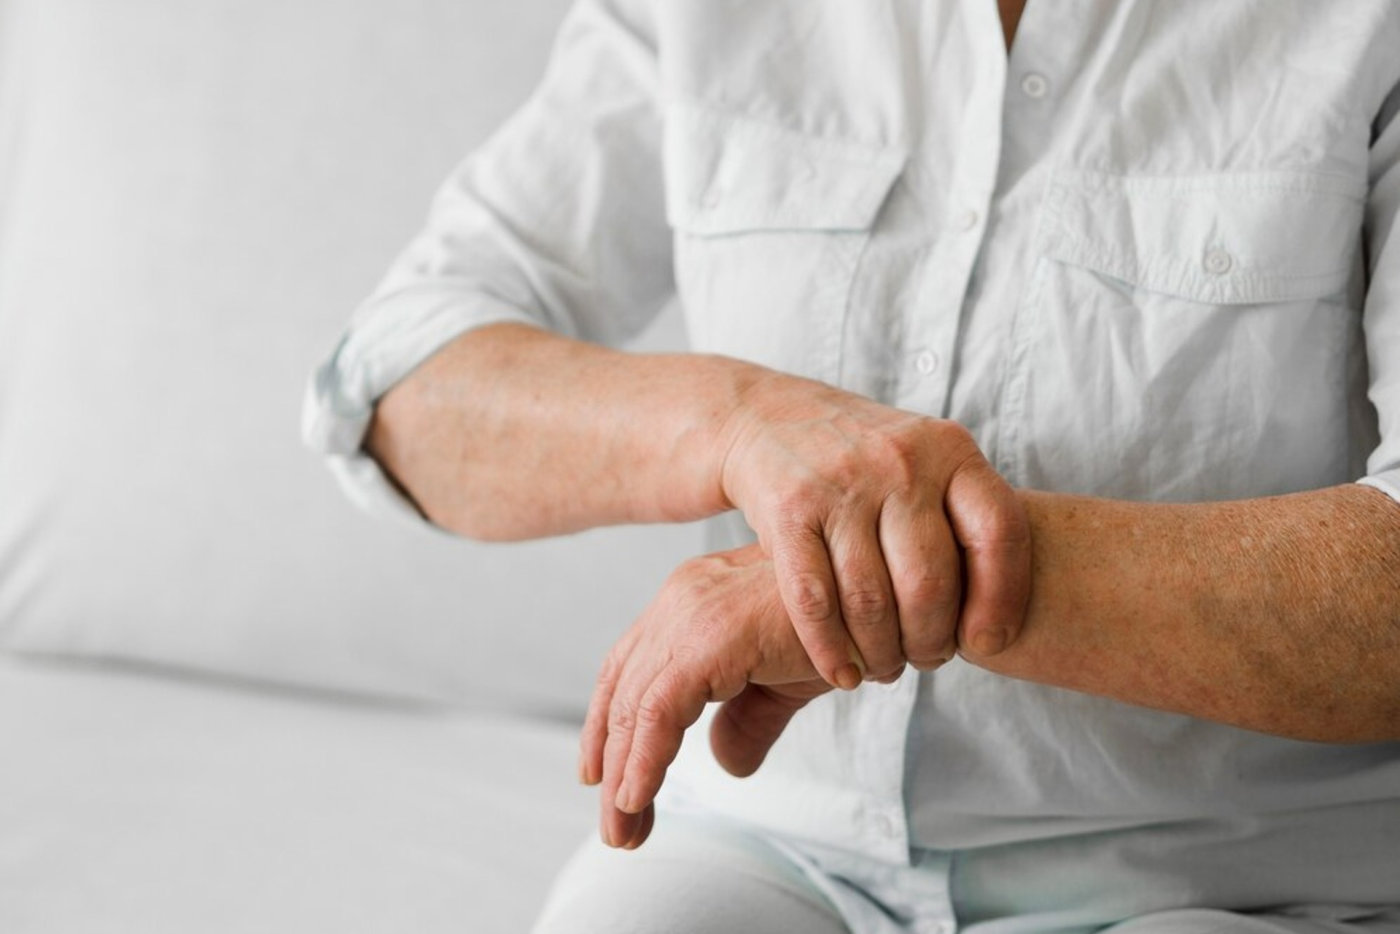 Elderly woman with arthritis holding her hand